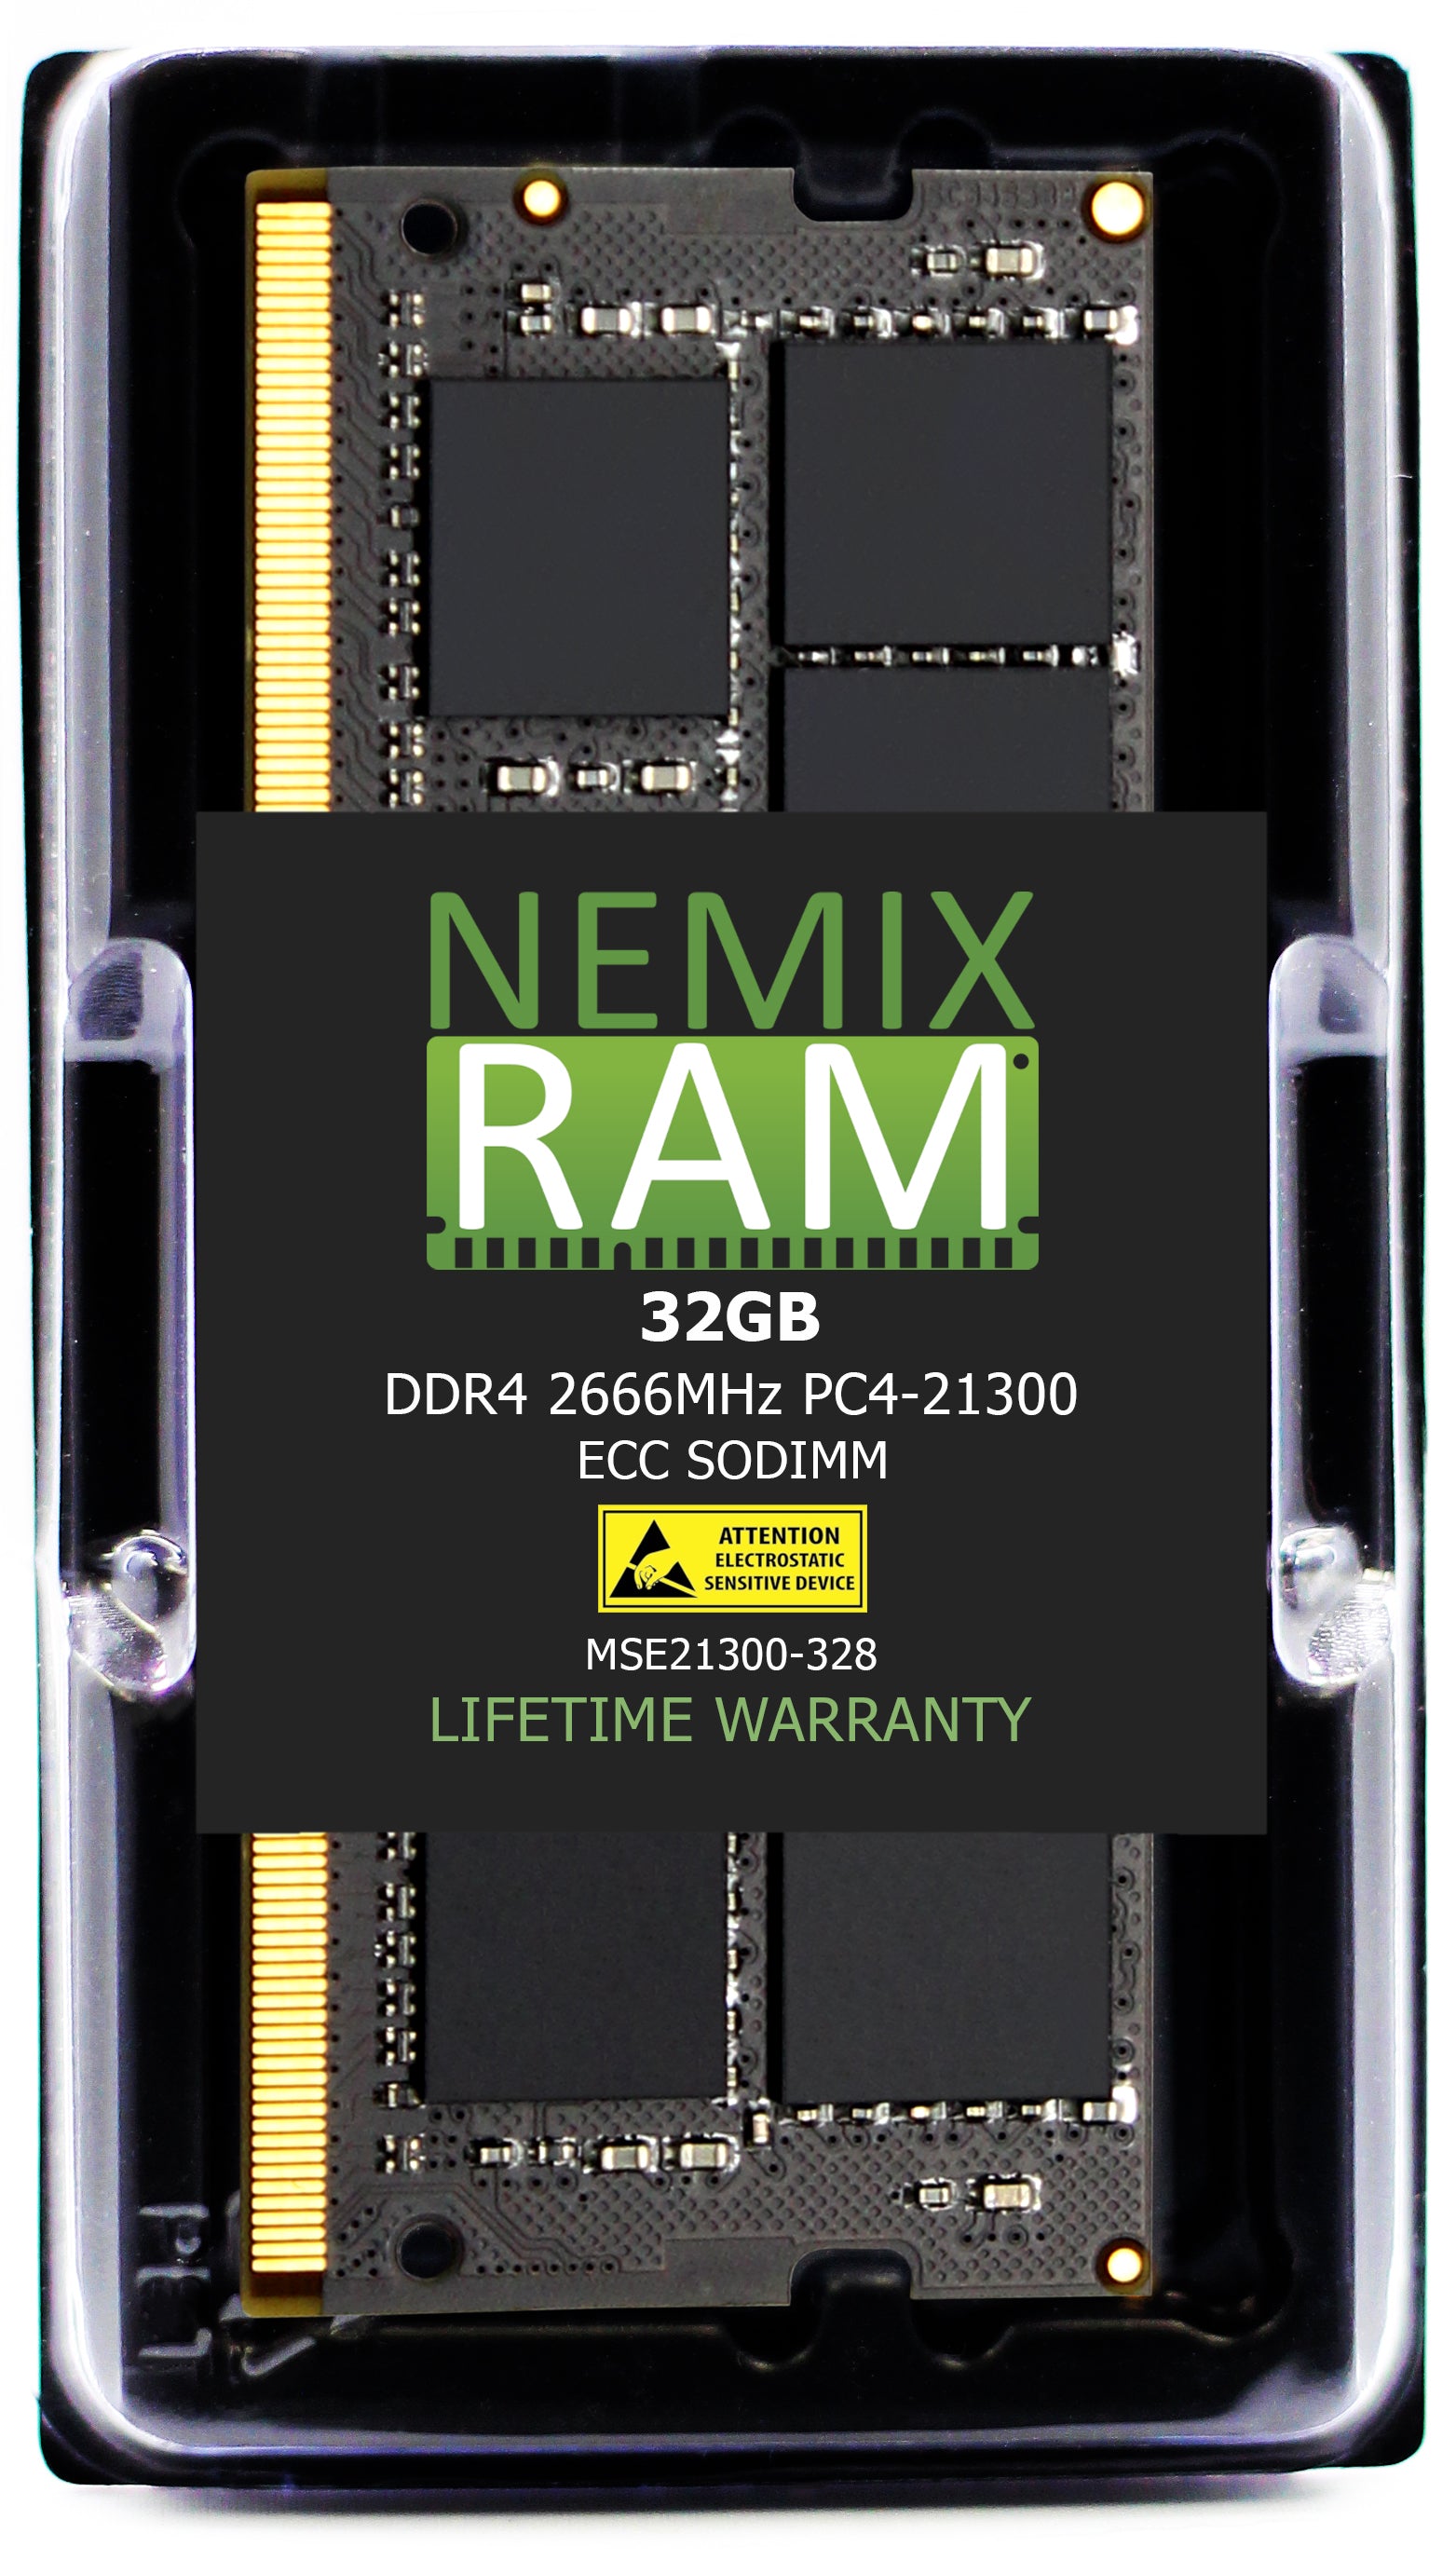 NEMIX RAM Memory Upgrade equivalent to ASUSTOR AS-32GECD4 92M11-S32ECD40 ECC SODIMM Memory Module